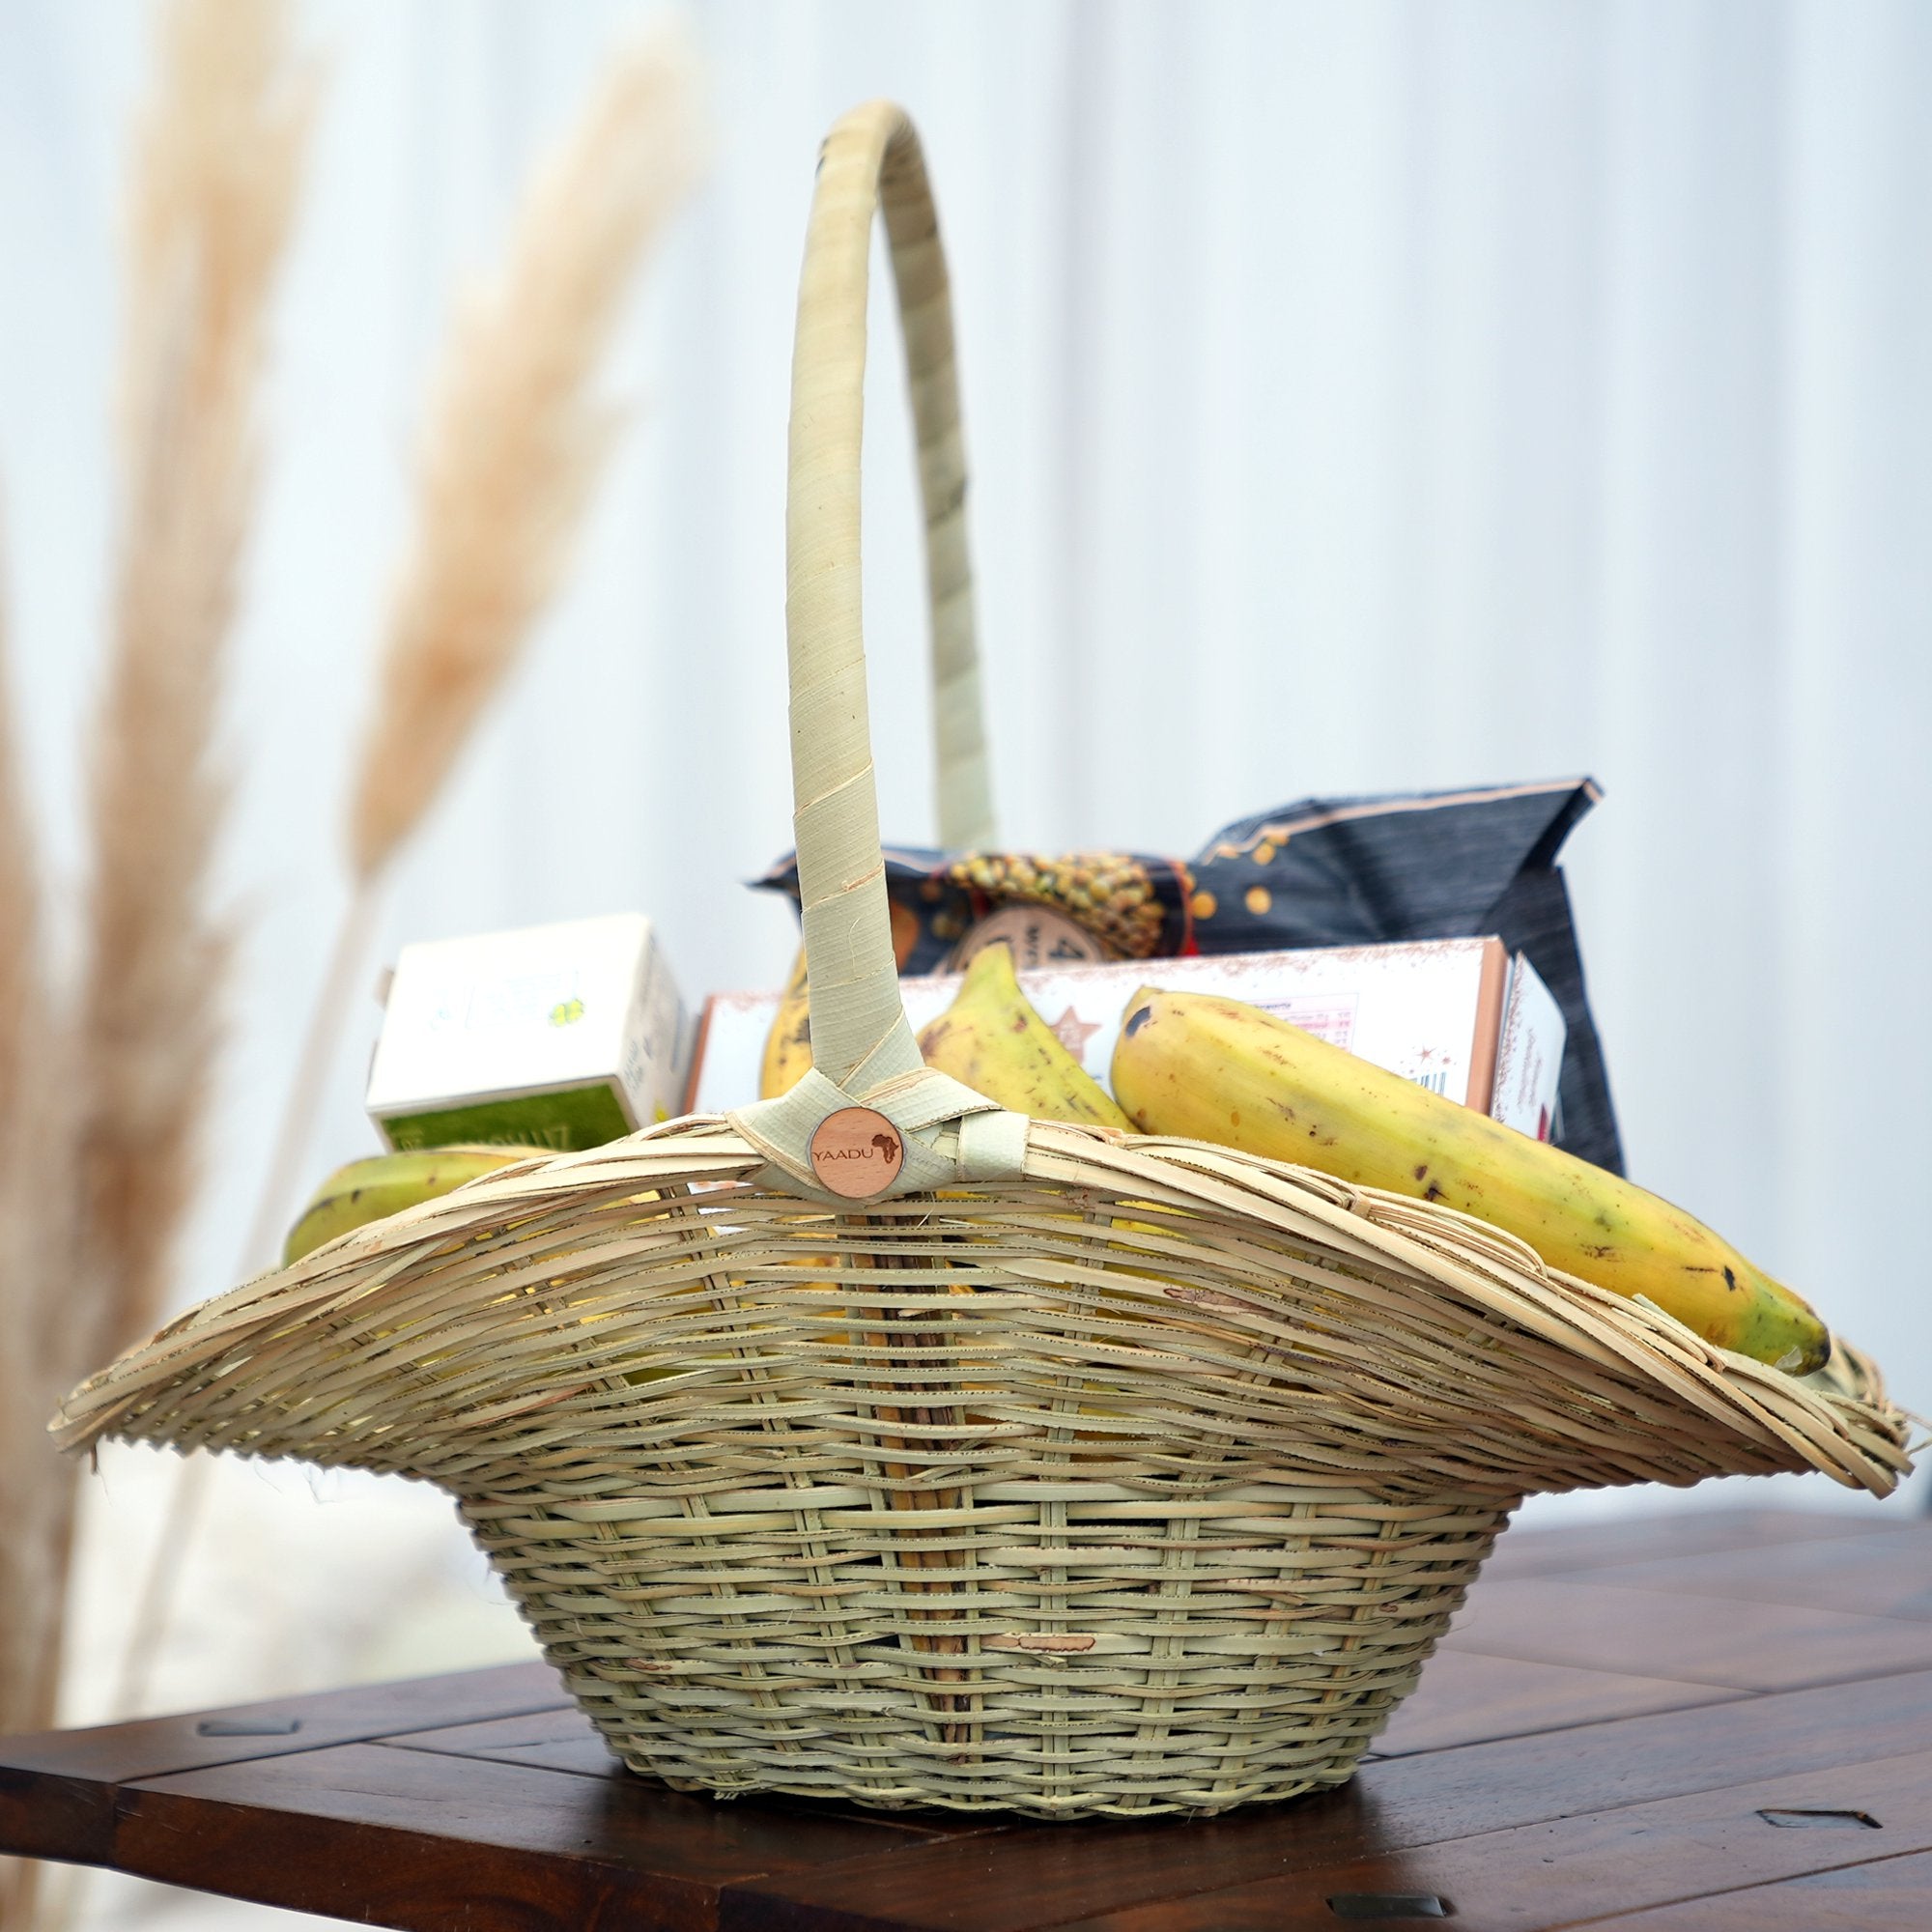 Oval shopping basket with handle – Sadio woven basket